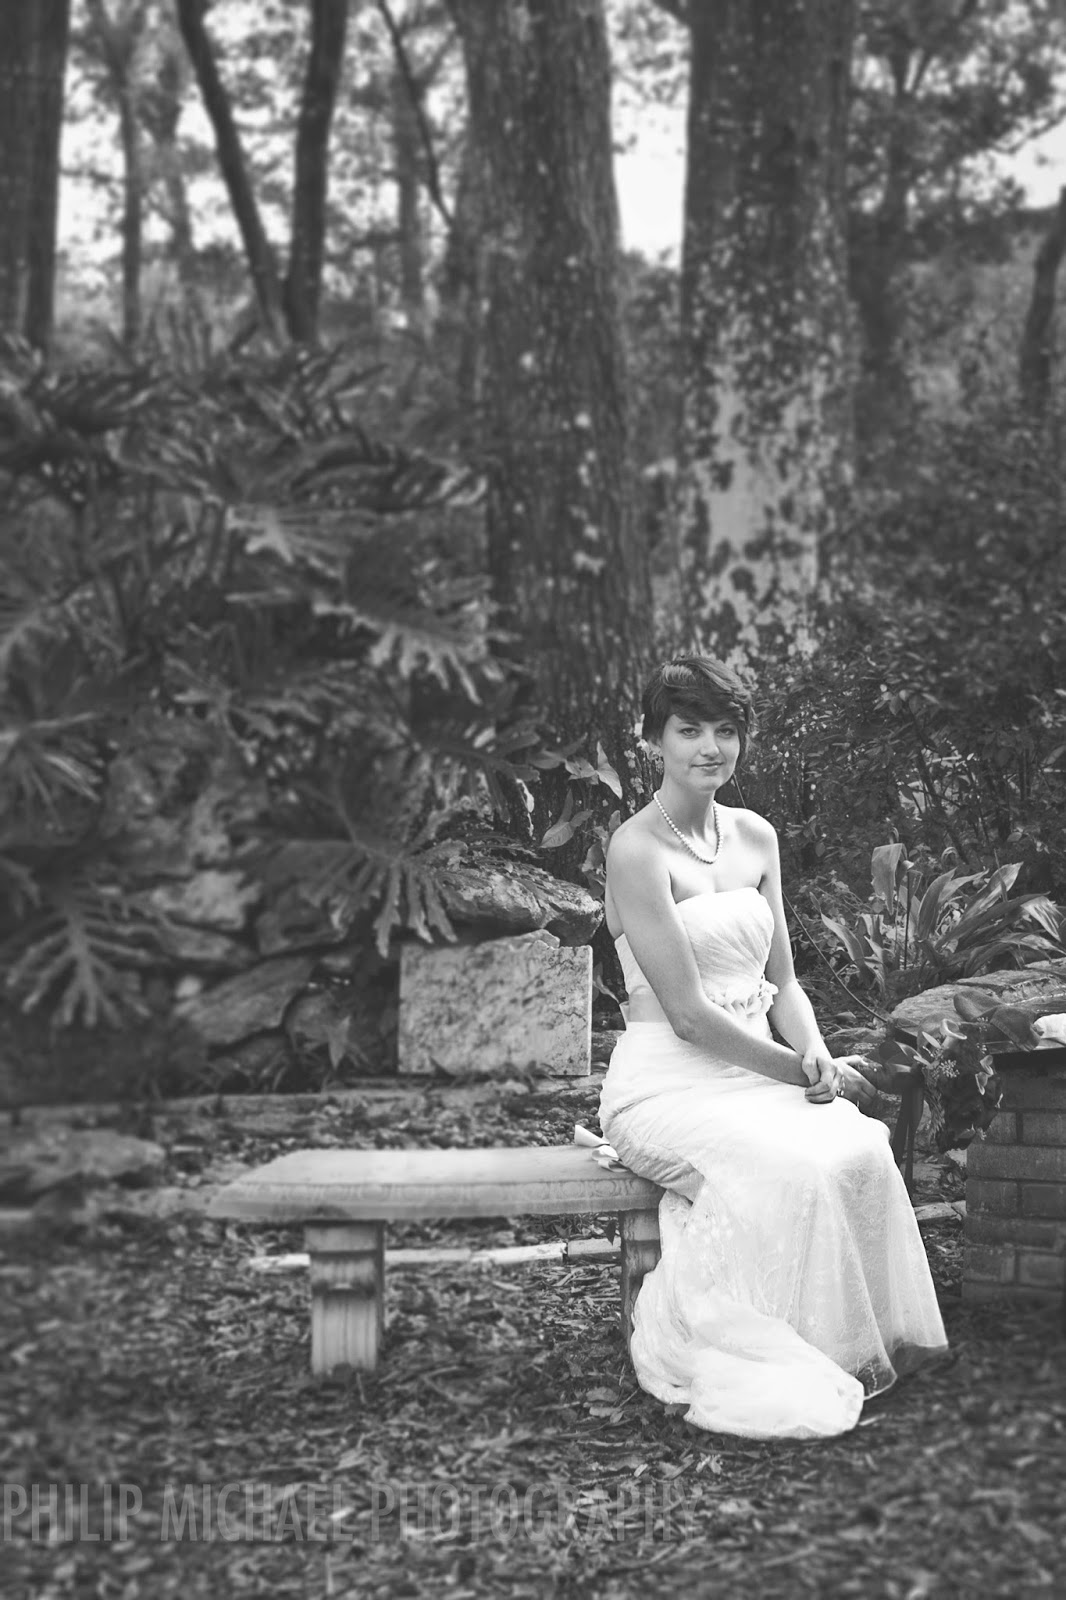 Philip Michael Photography Cook Wedding At Harmony Gardens